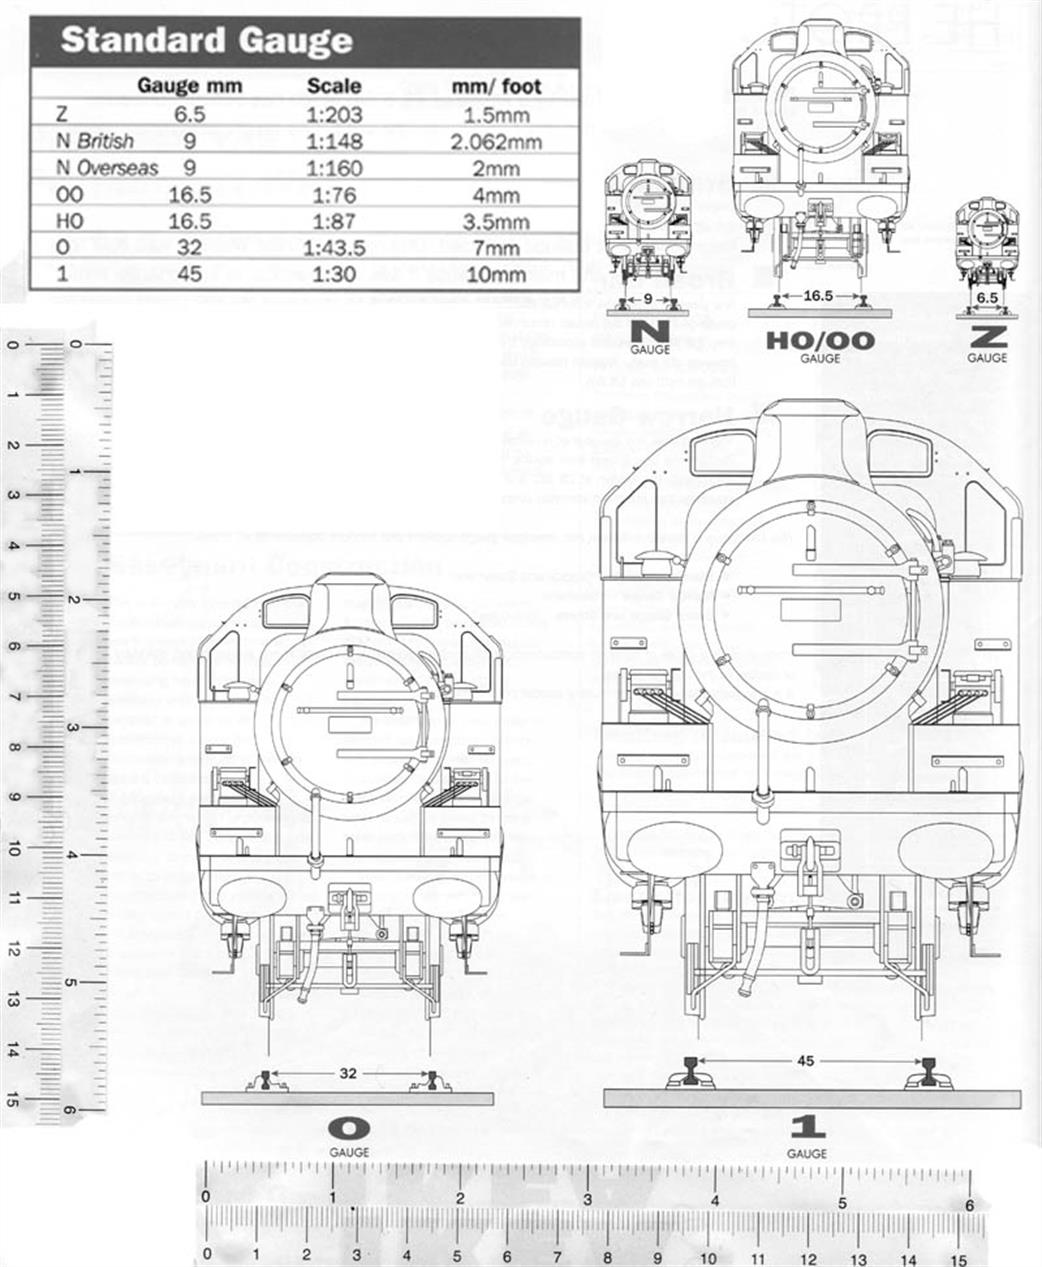 Antics SG Model Railway Scales & Gauges